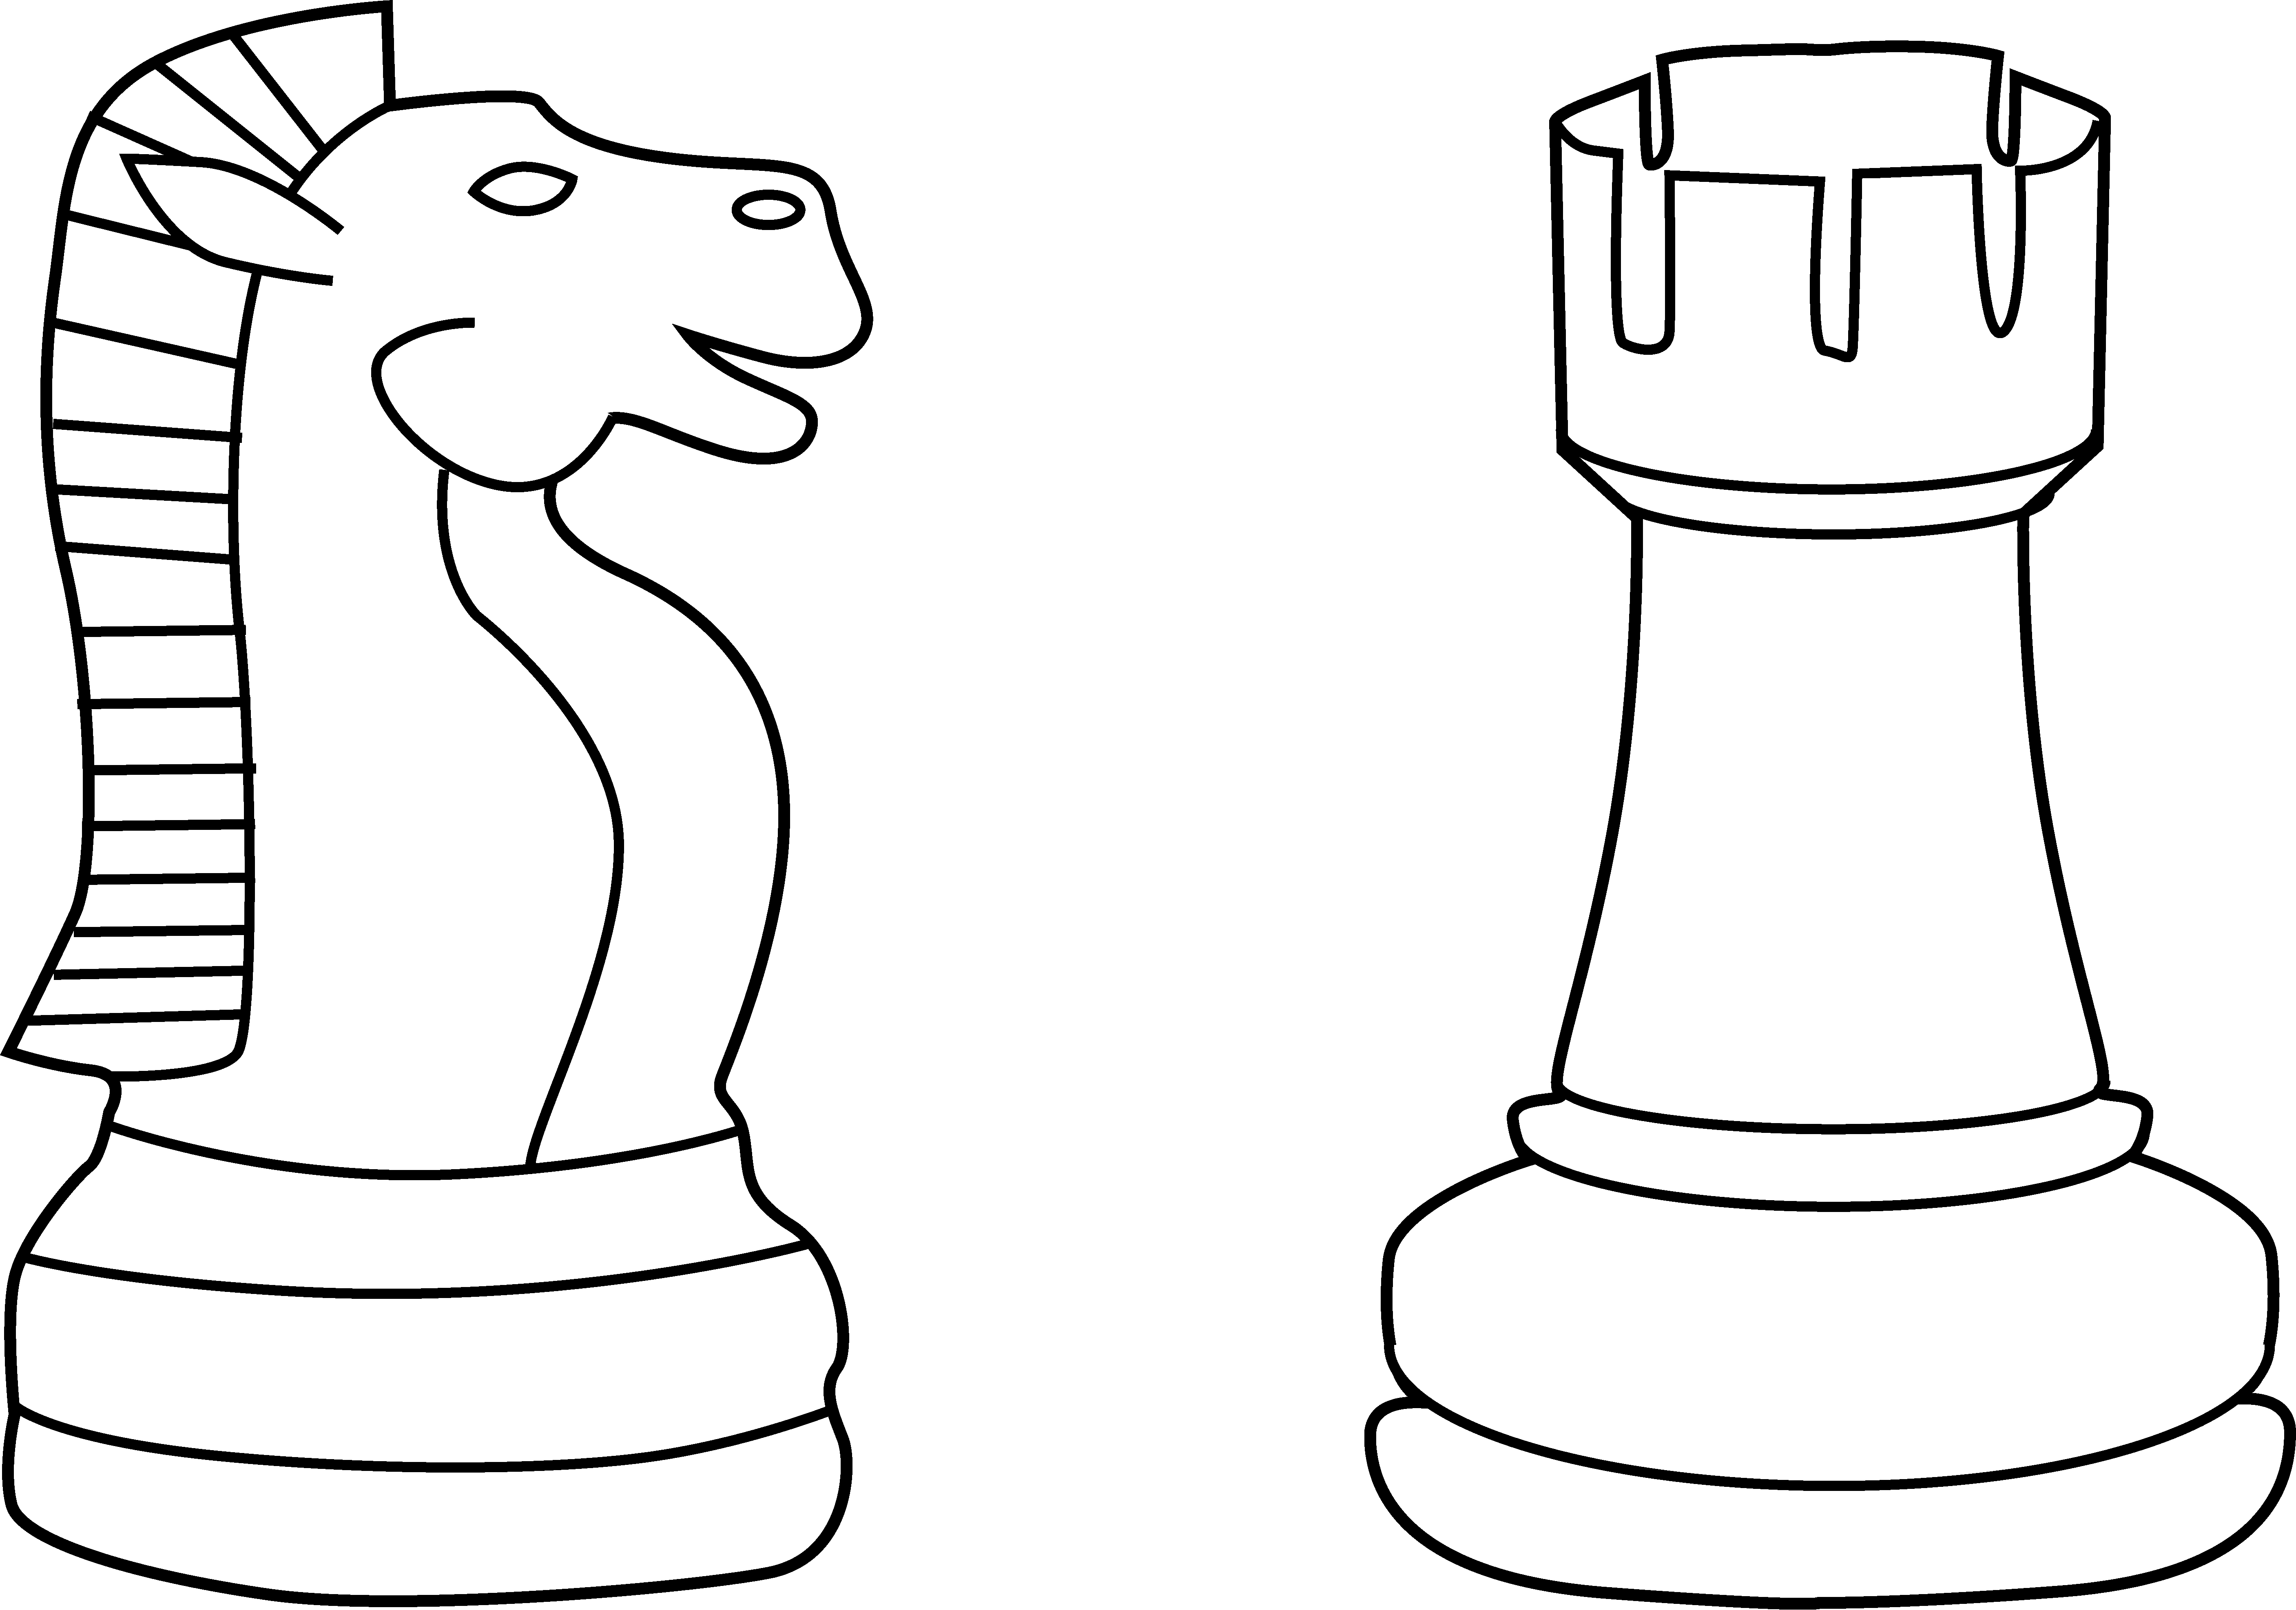 chess clipart cartoon